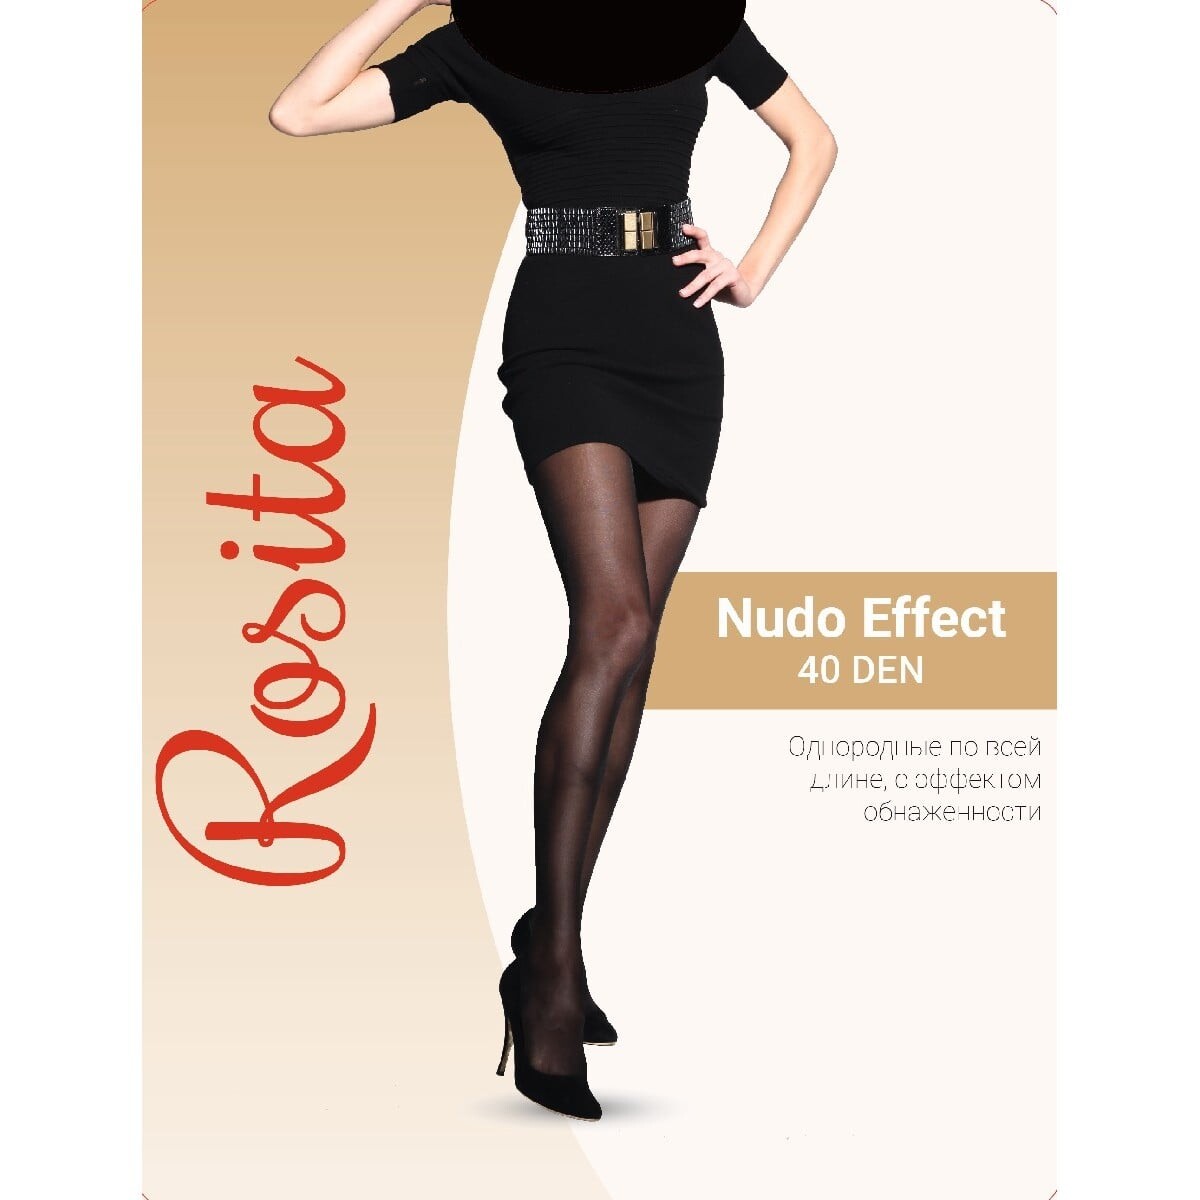   nudo  effect 40